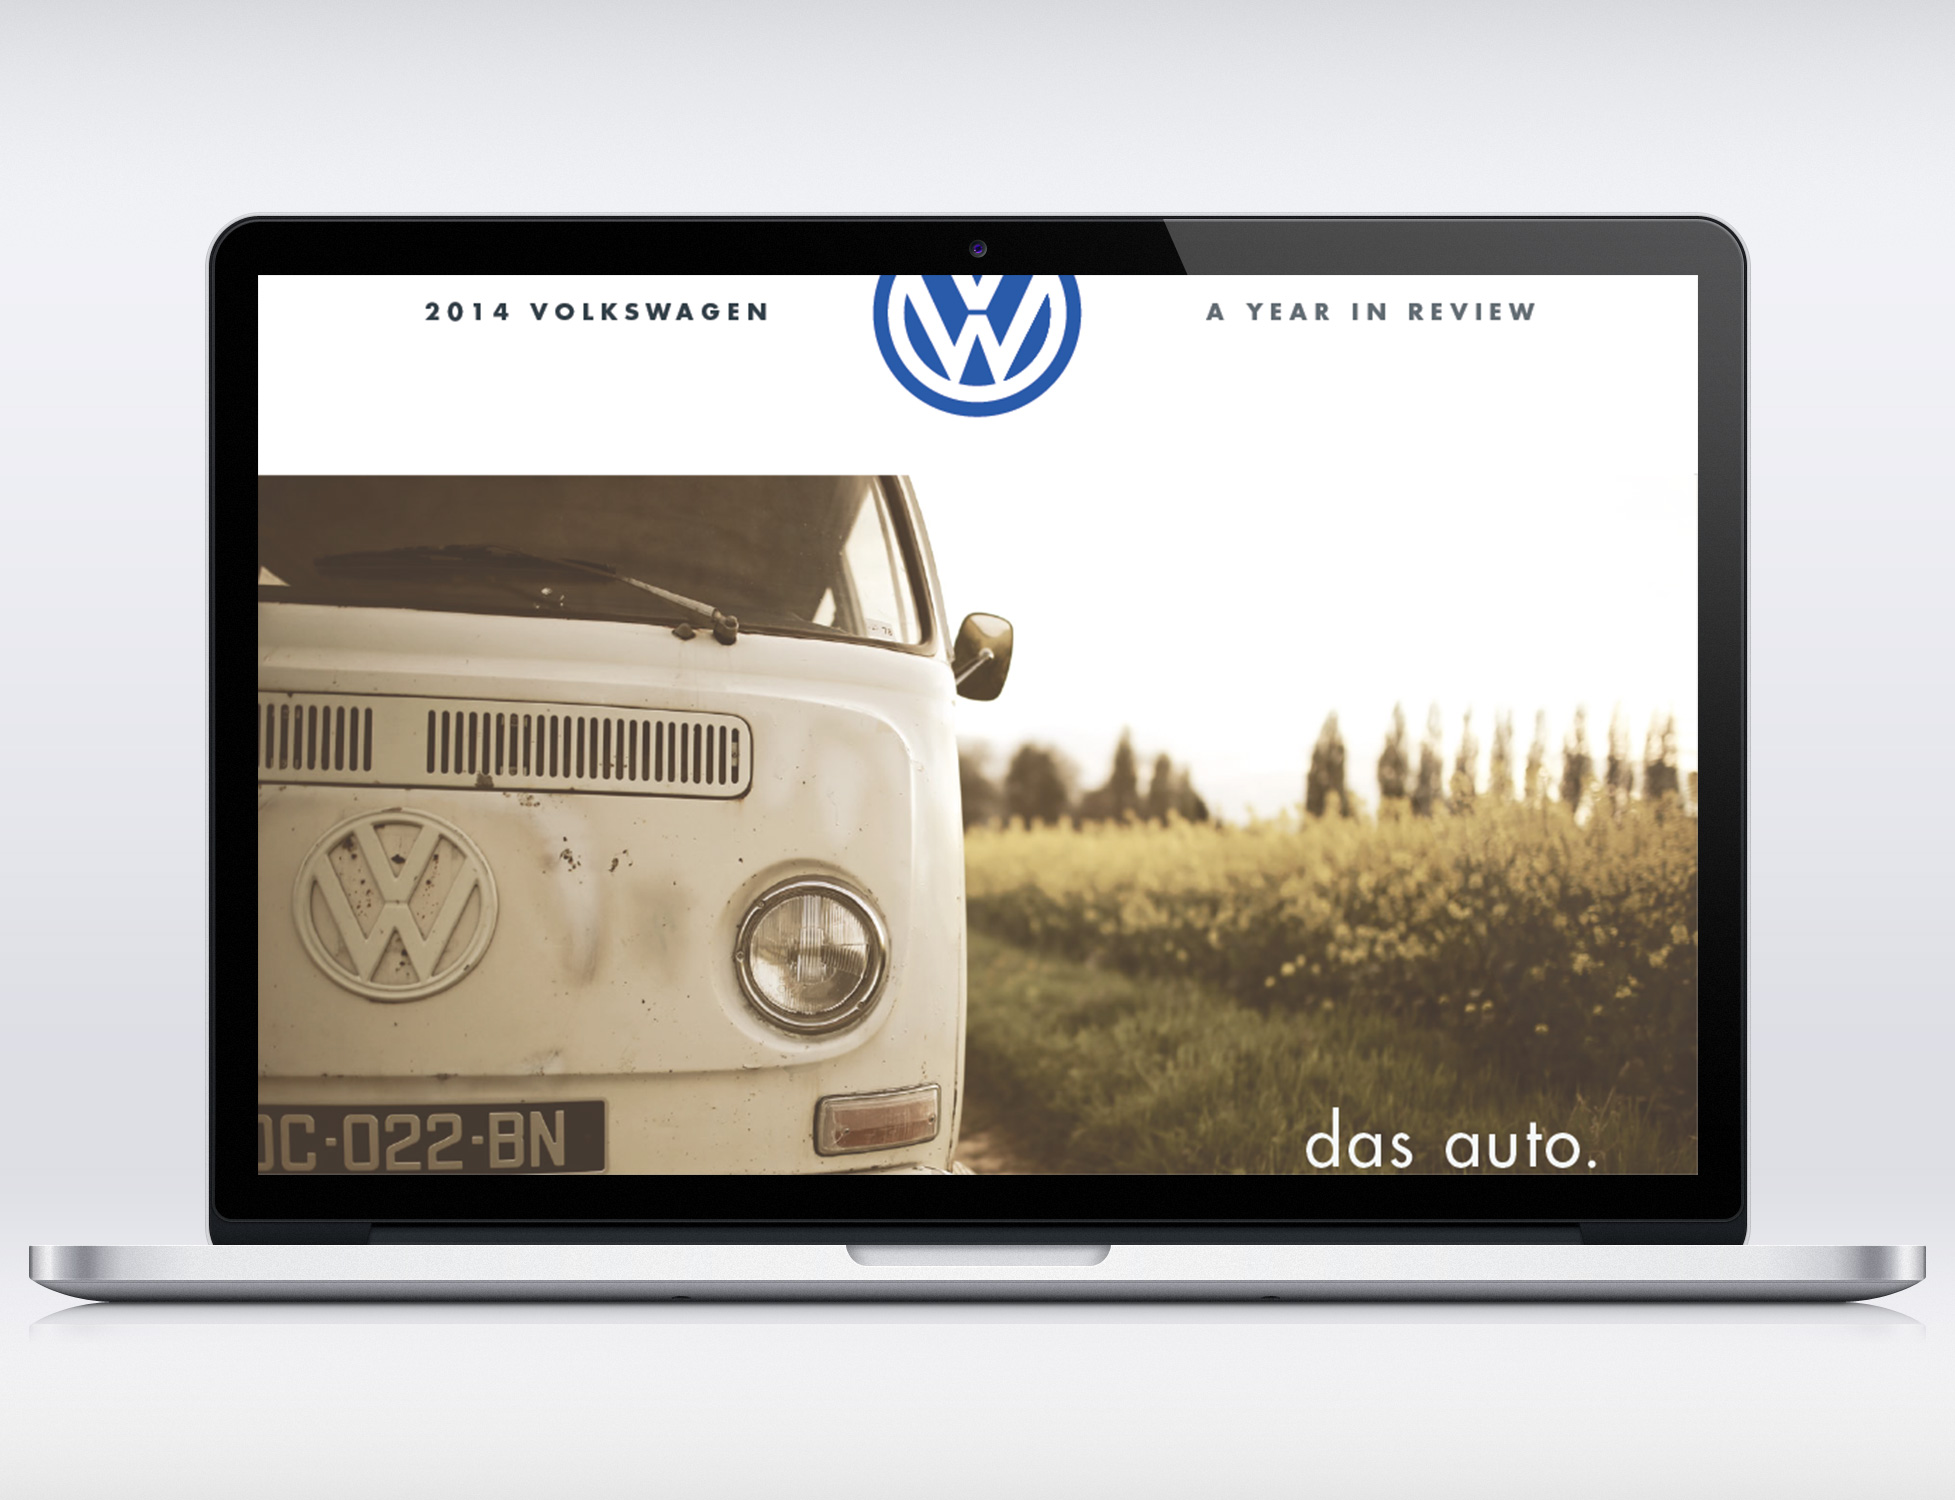  Digital, single-scroll annual report for Volkswagen. 